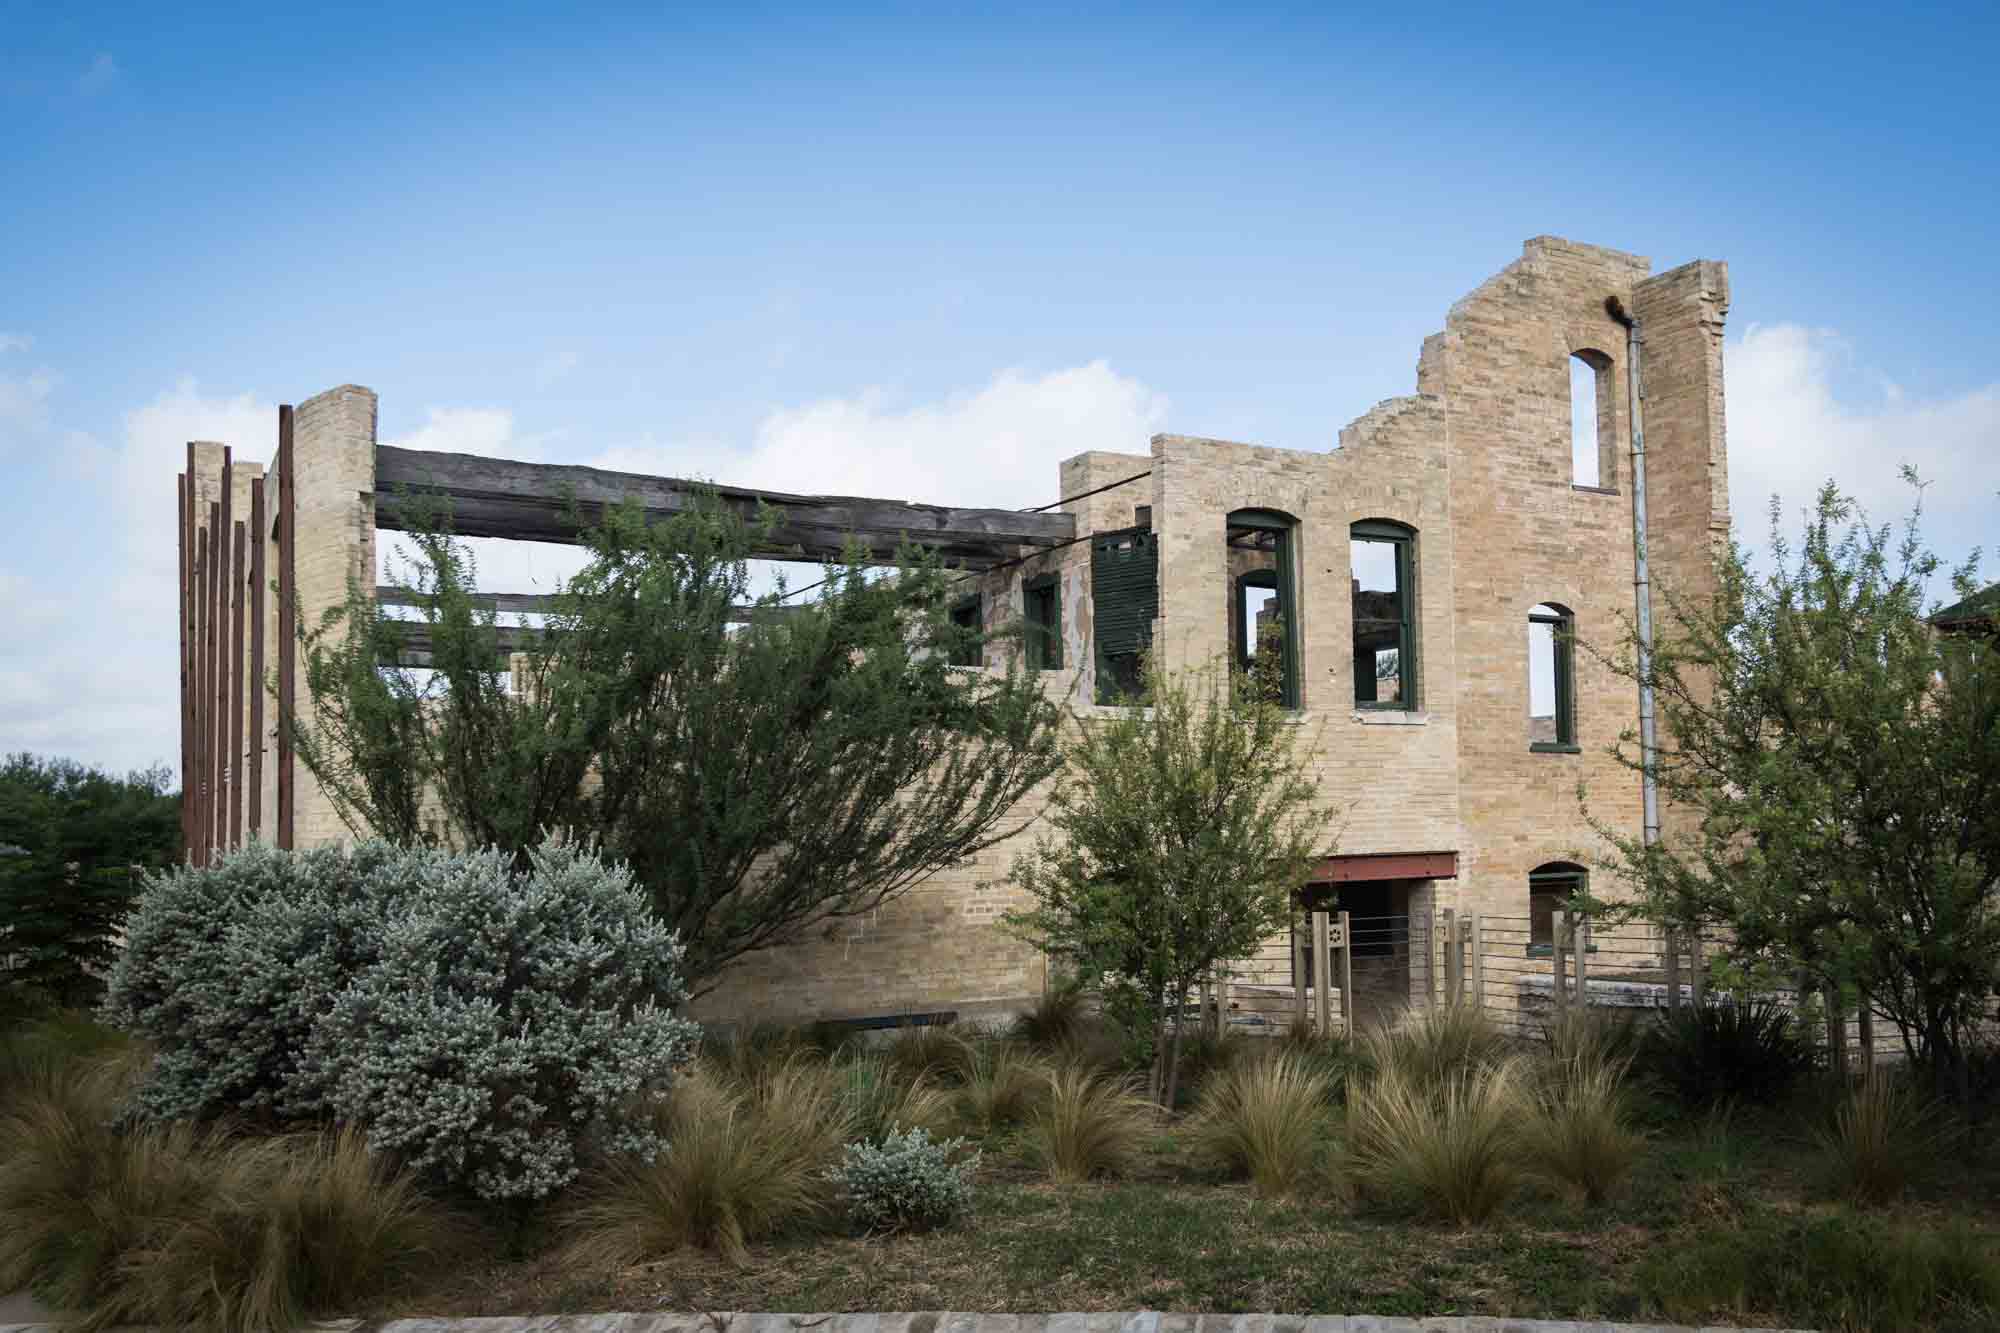 Hot Wells Hotel Ruins in San Antonio